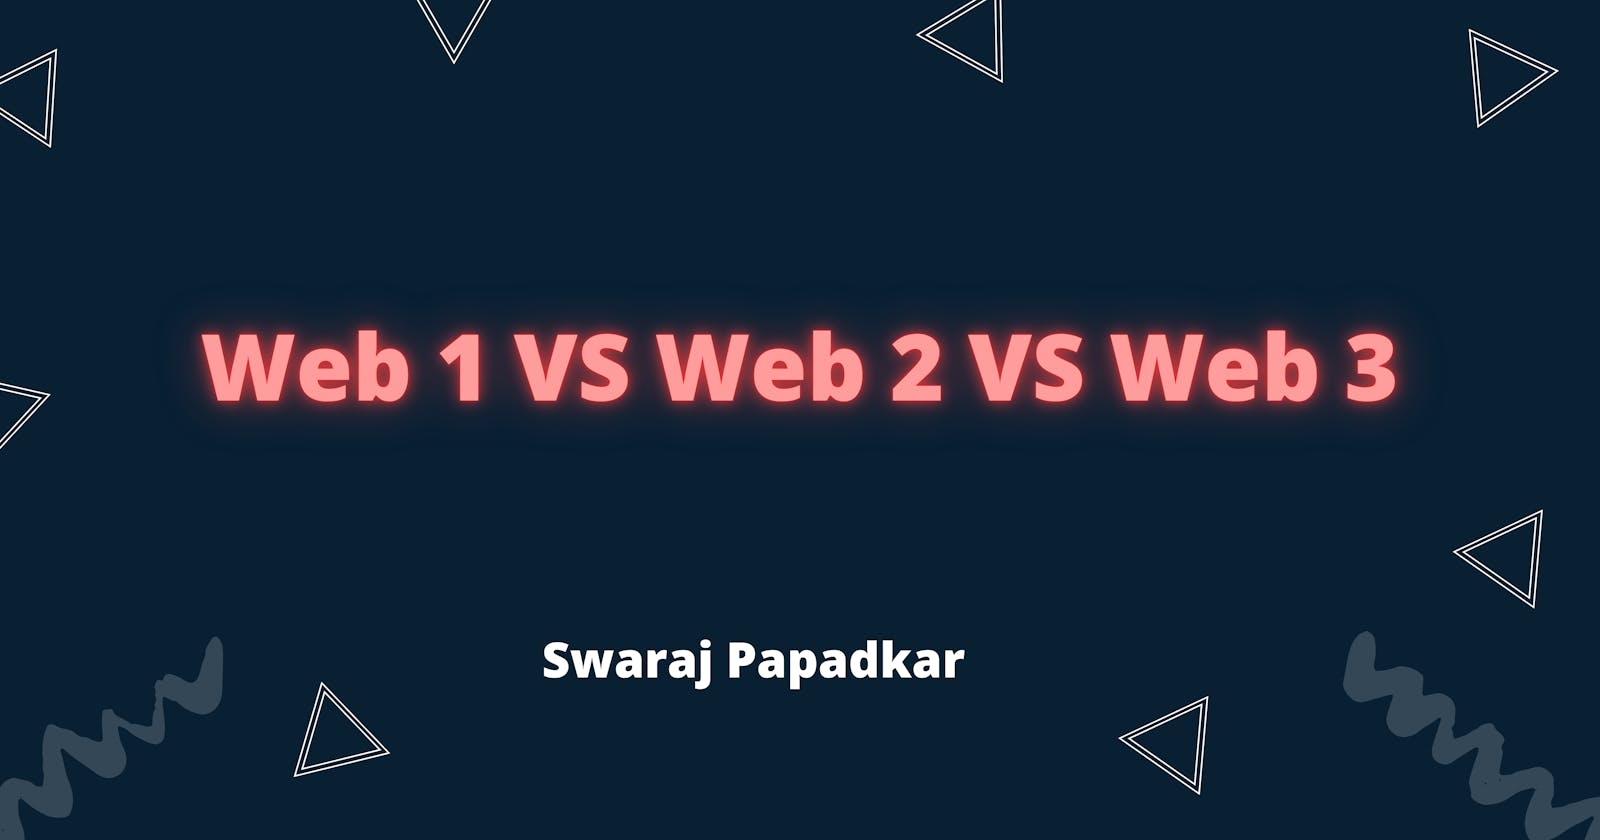 Web 1 VS Web 2 VS Web 3